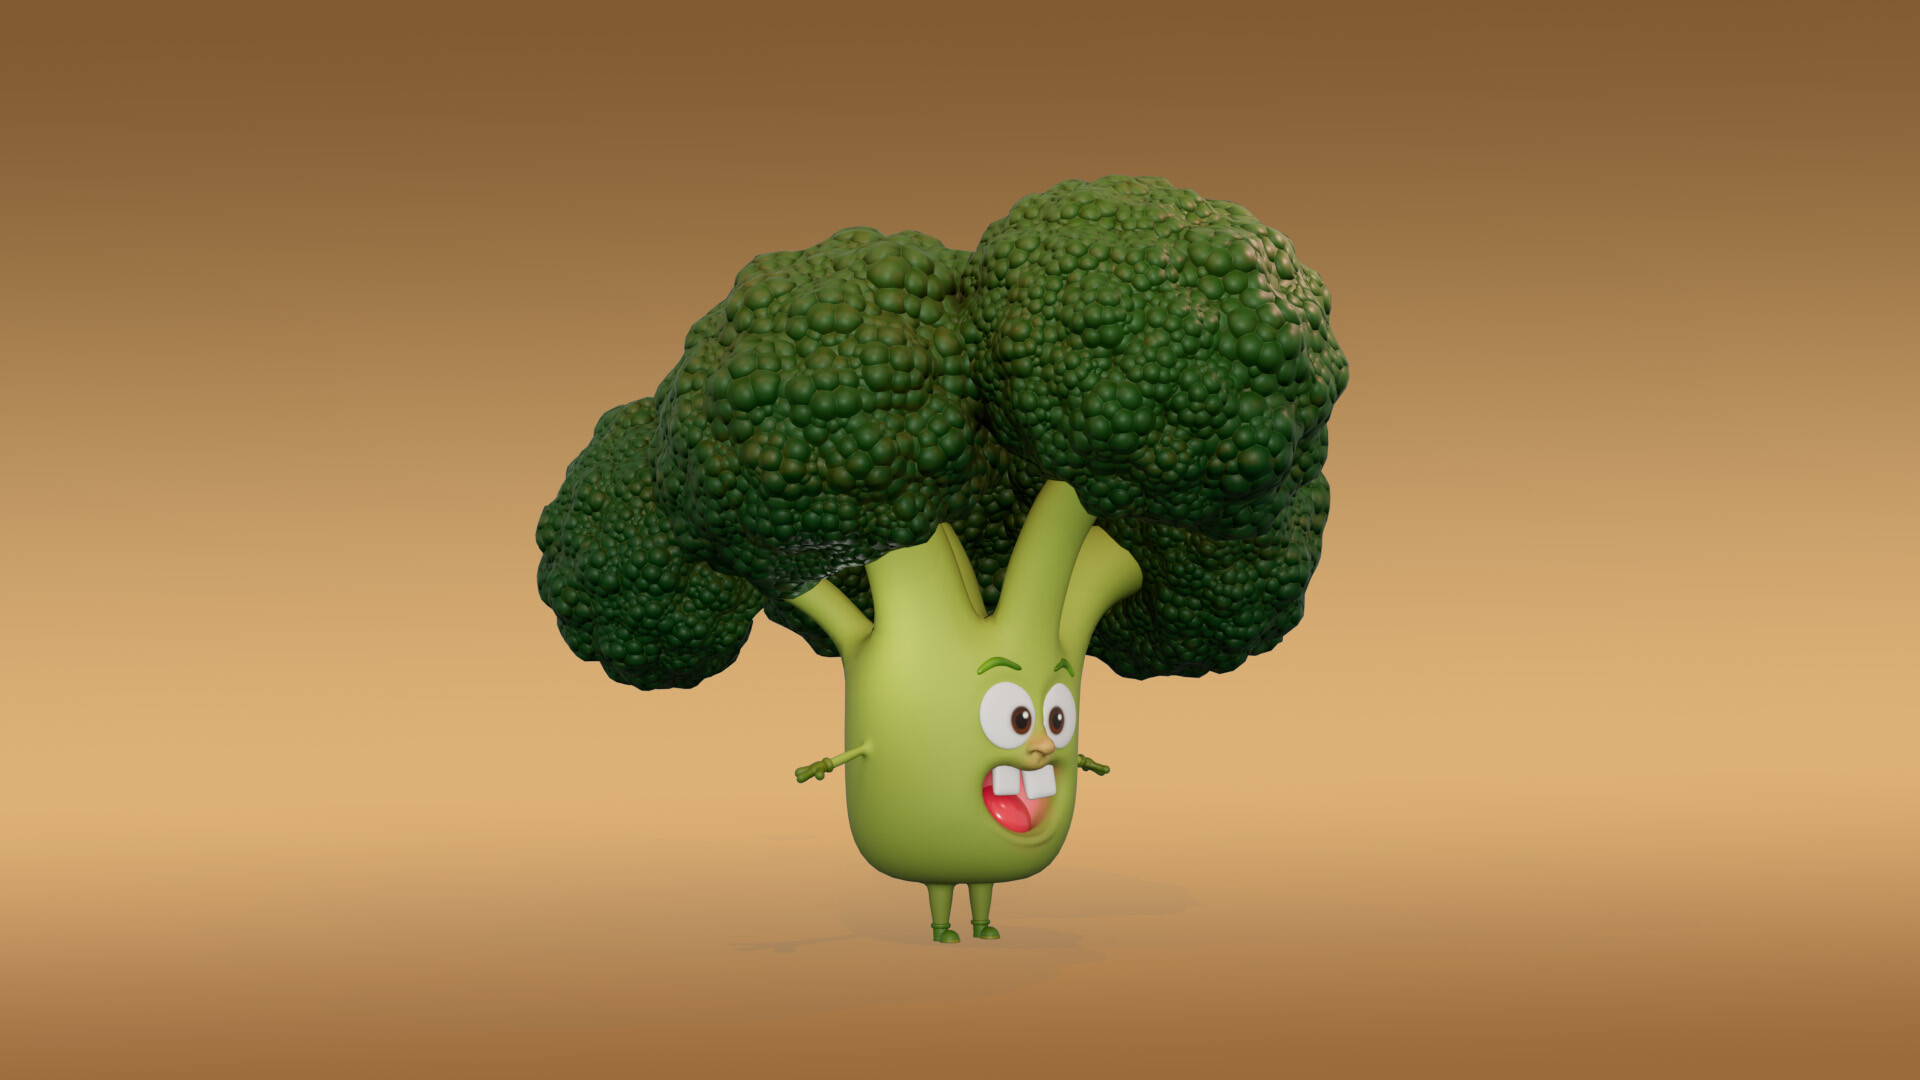 ArtStation - Cartoon broccoli